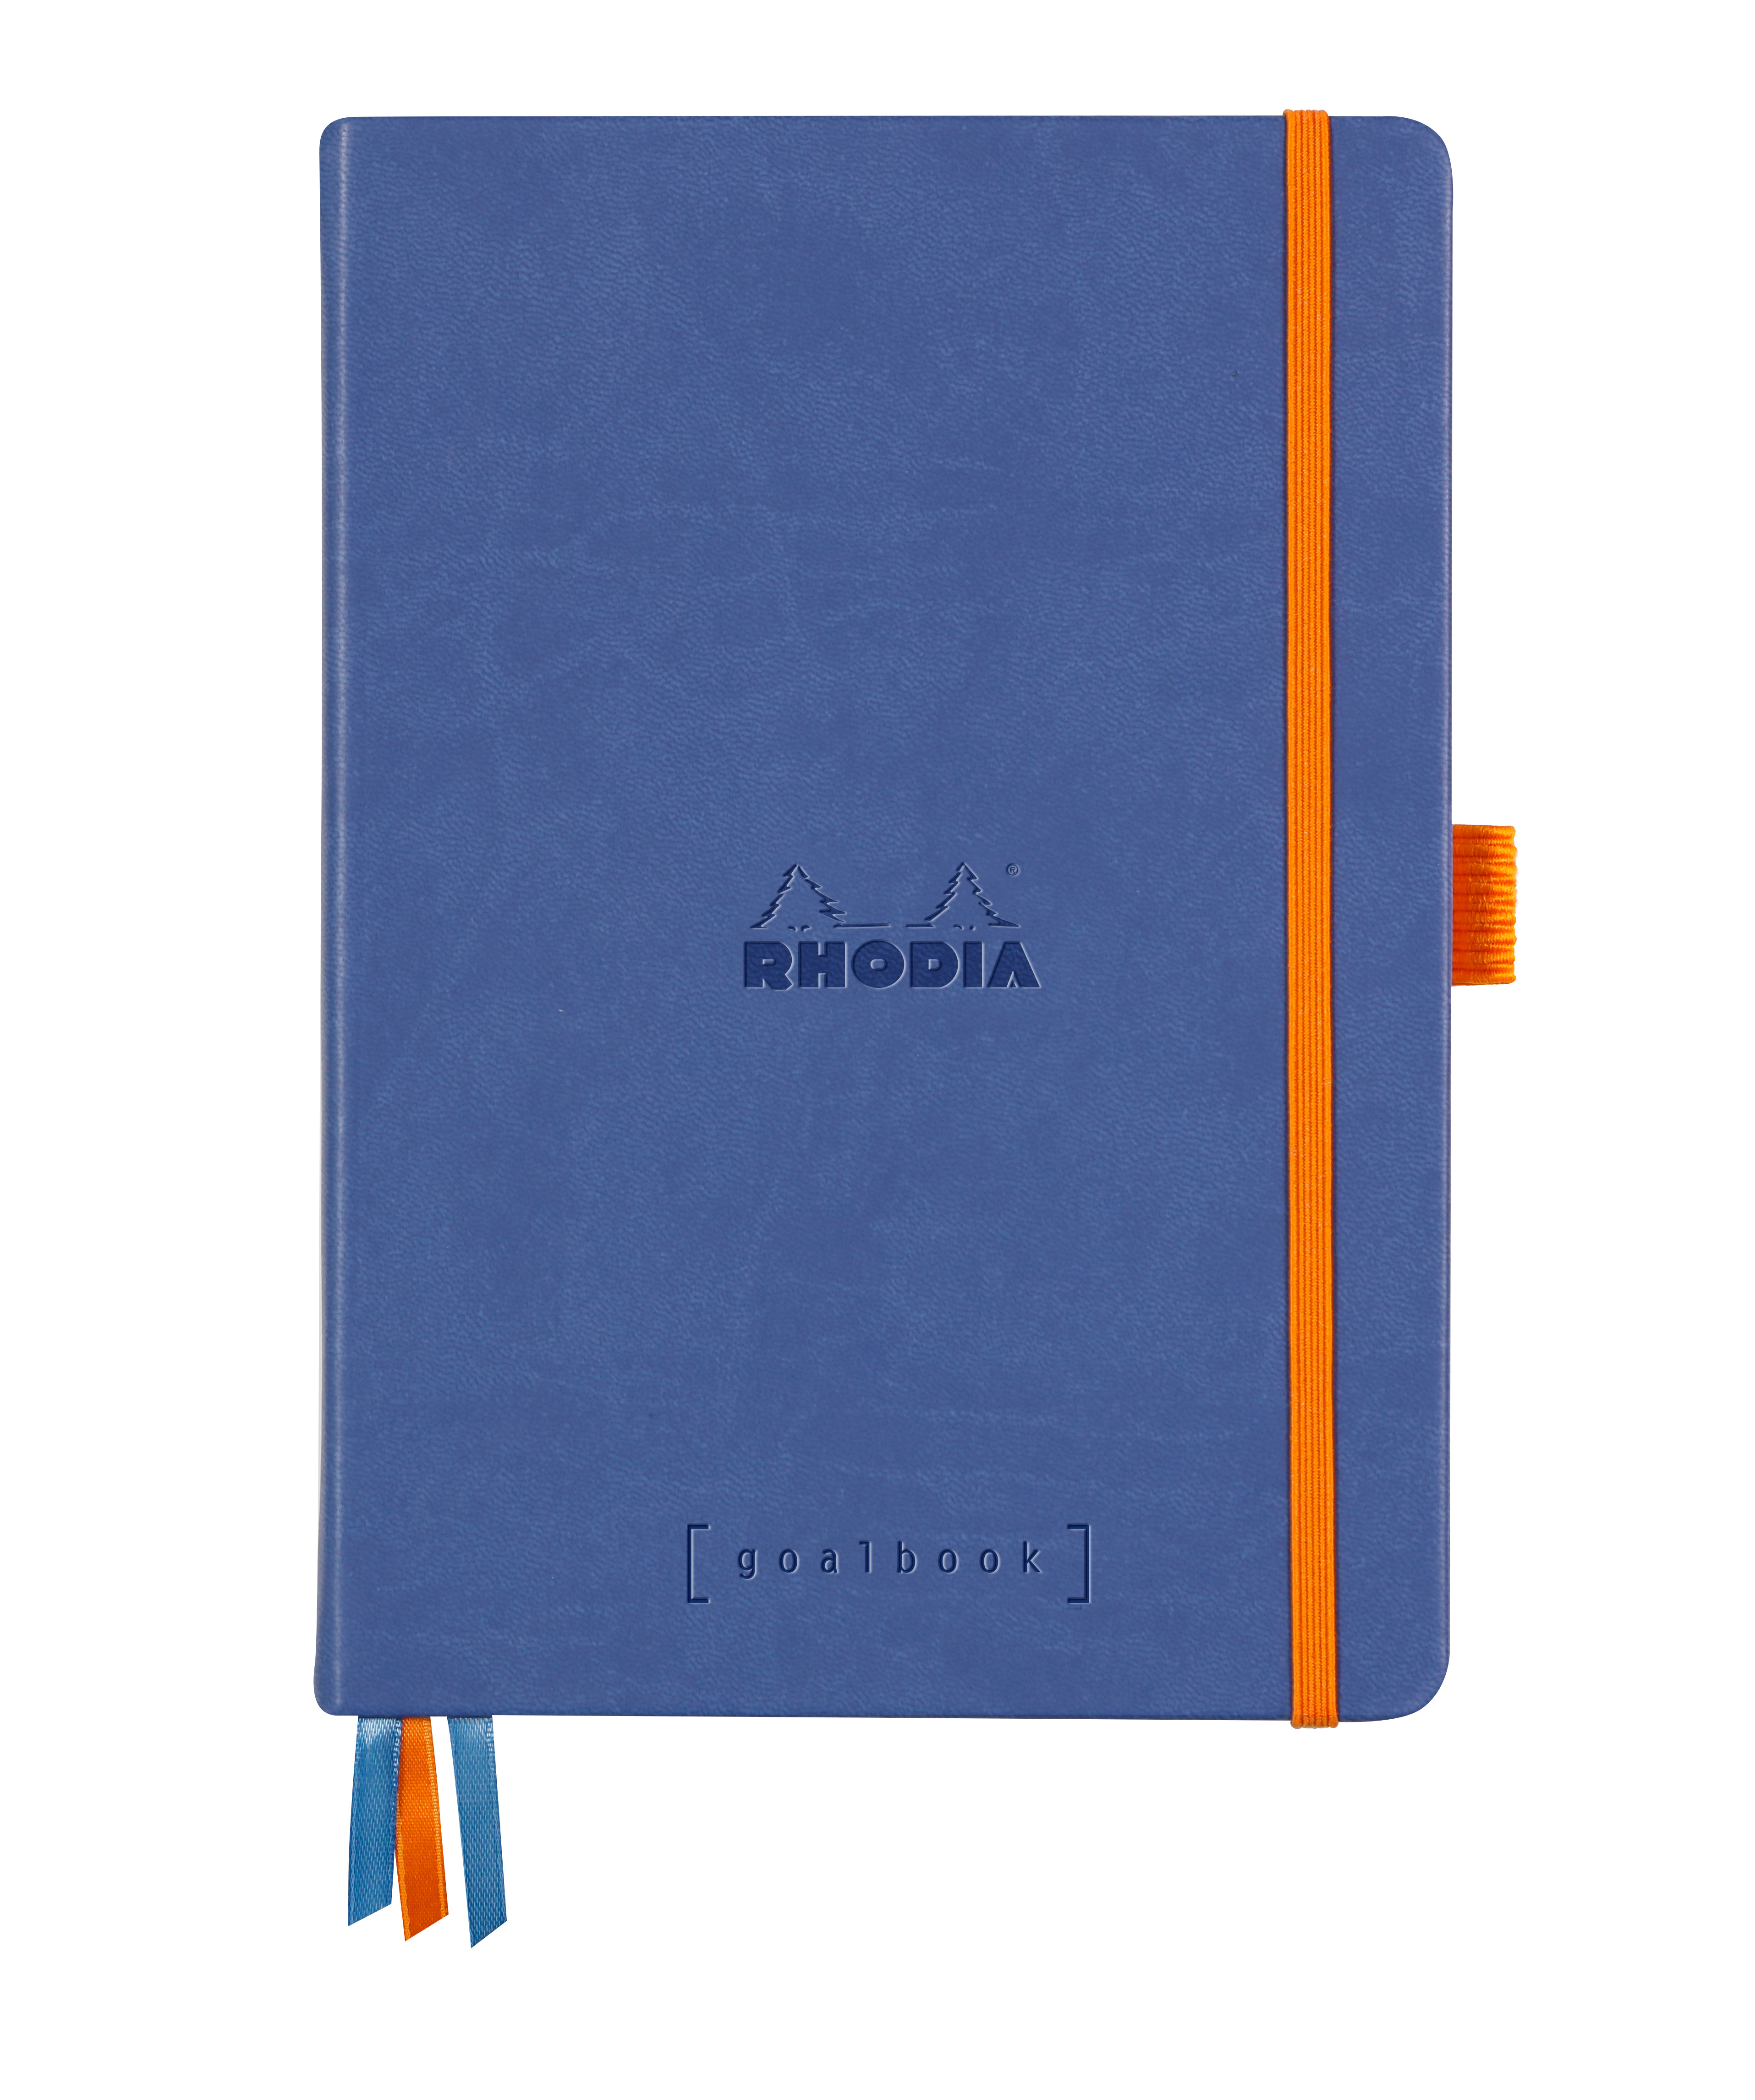 RHODIA Goalbook Carnet A5 118577C Hardcover bleu saphir 240 f. Hardcover bleu saphir 240 f.